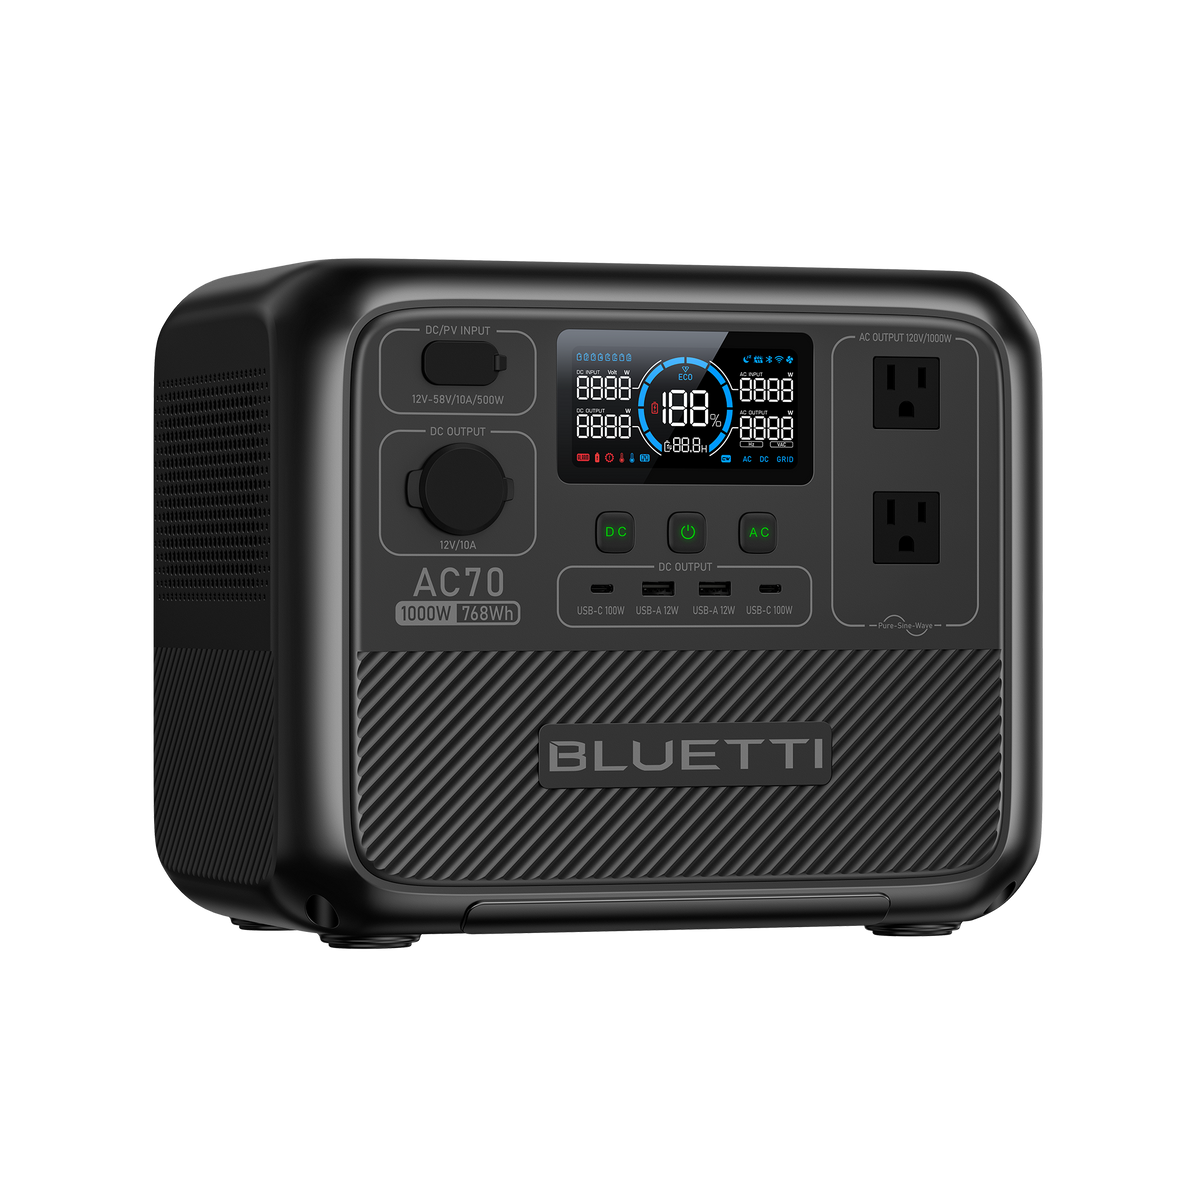 Bluetti EB70 EB70S 716Wh Portable Power Station Generator 800W / 1000W  Solar Generator Camping Fishing LiFePO4 Battery Backup